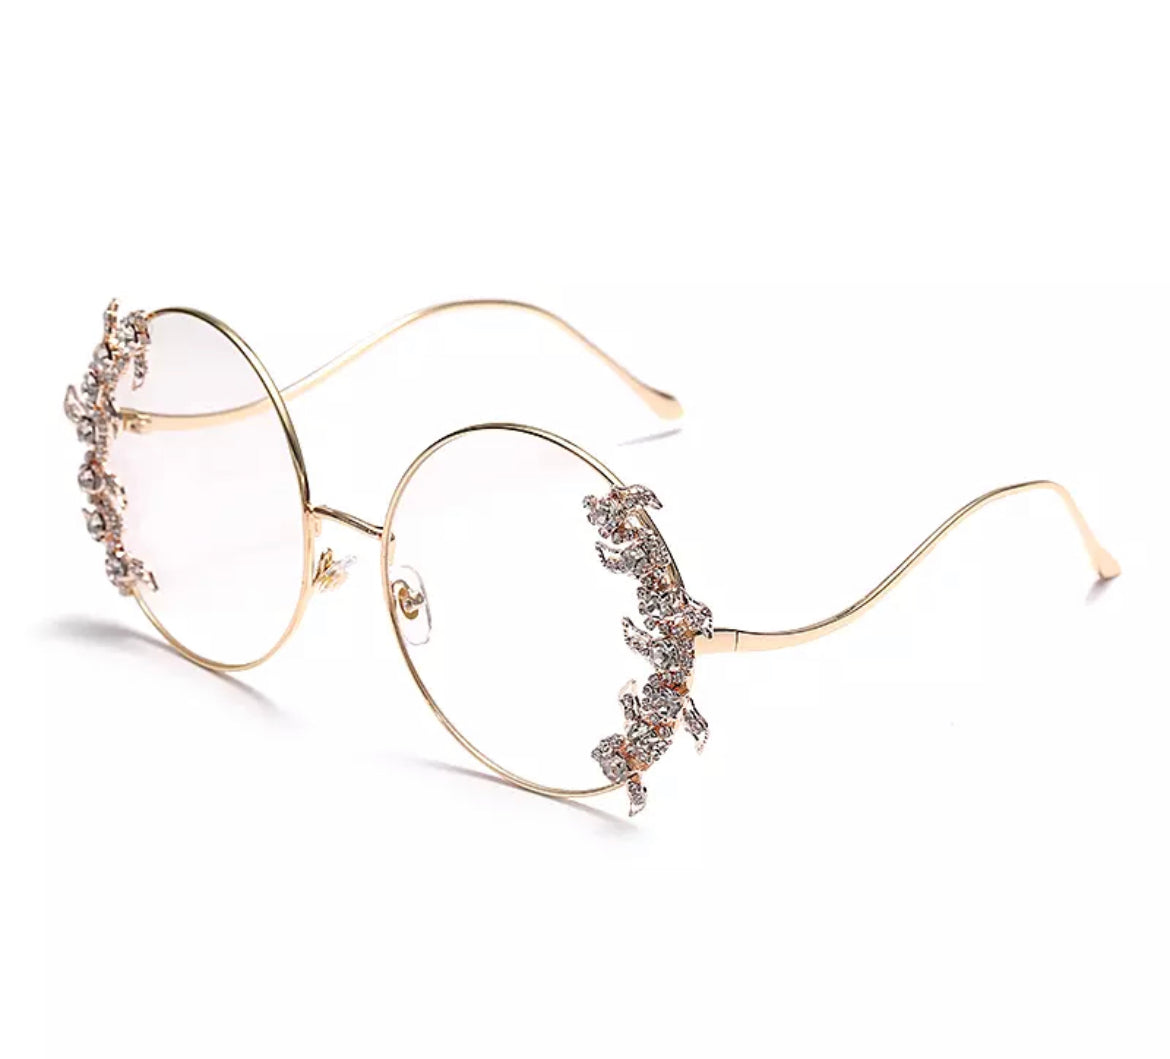 Crystal Floral Vintage Style Sunglasses